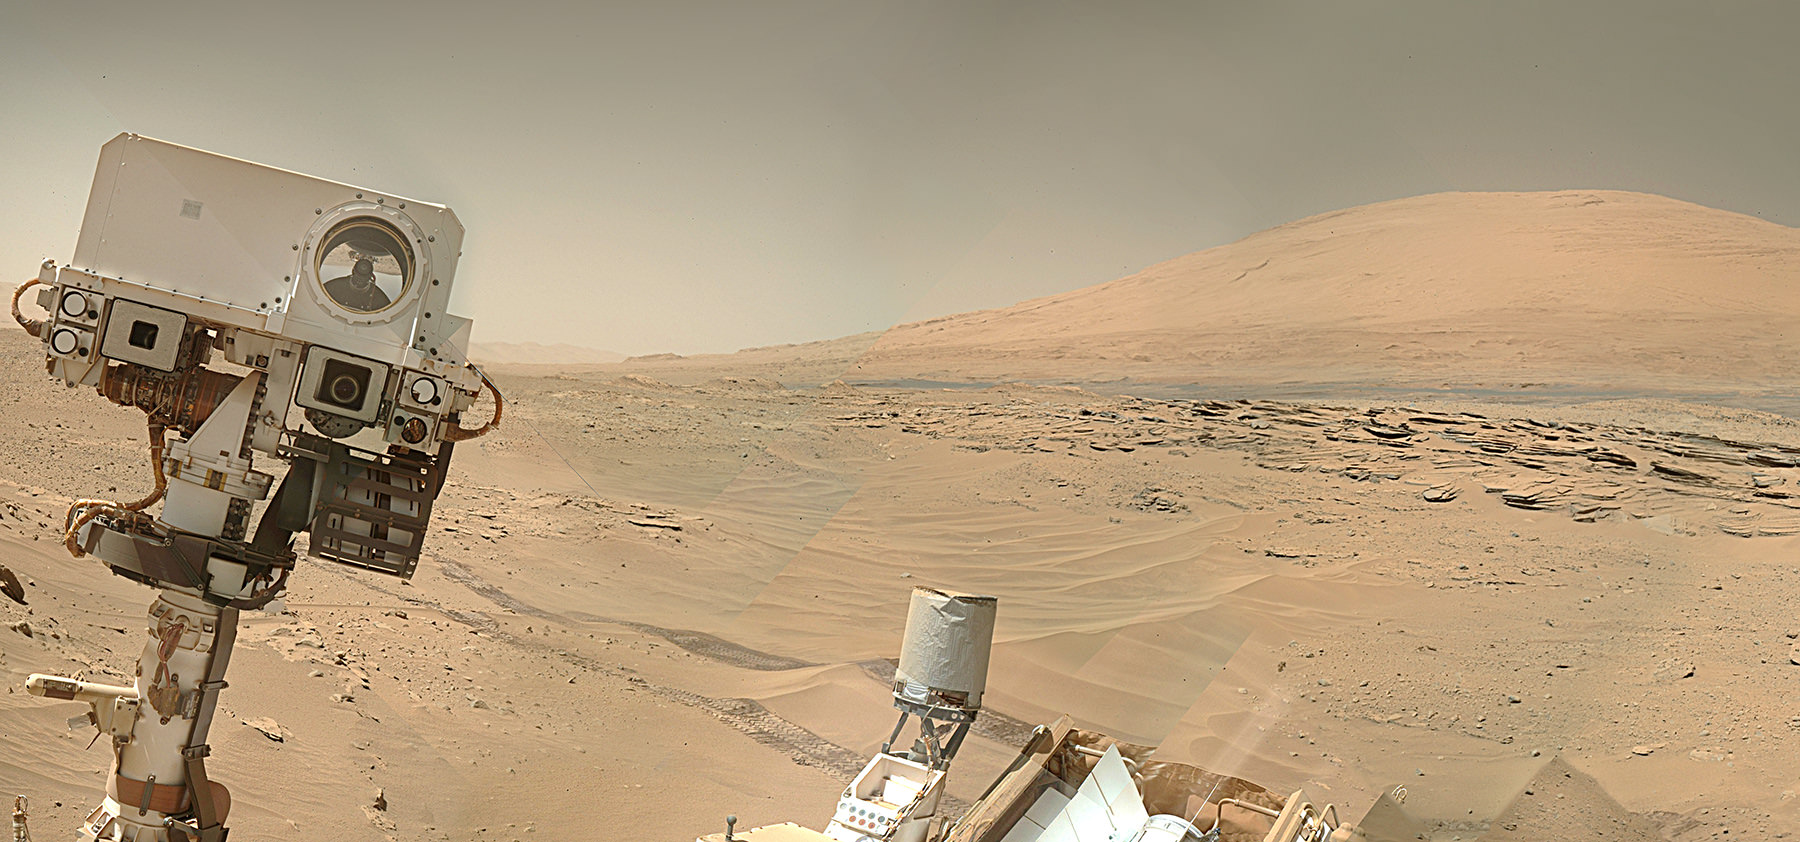 Mars rover image